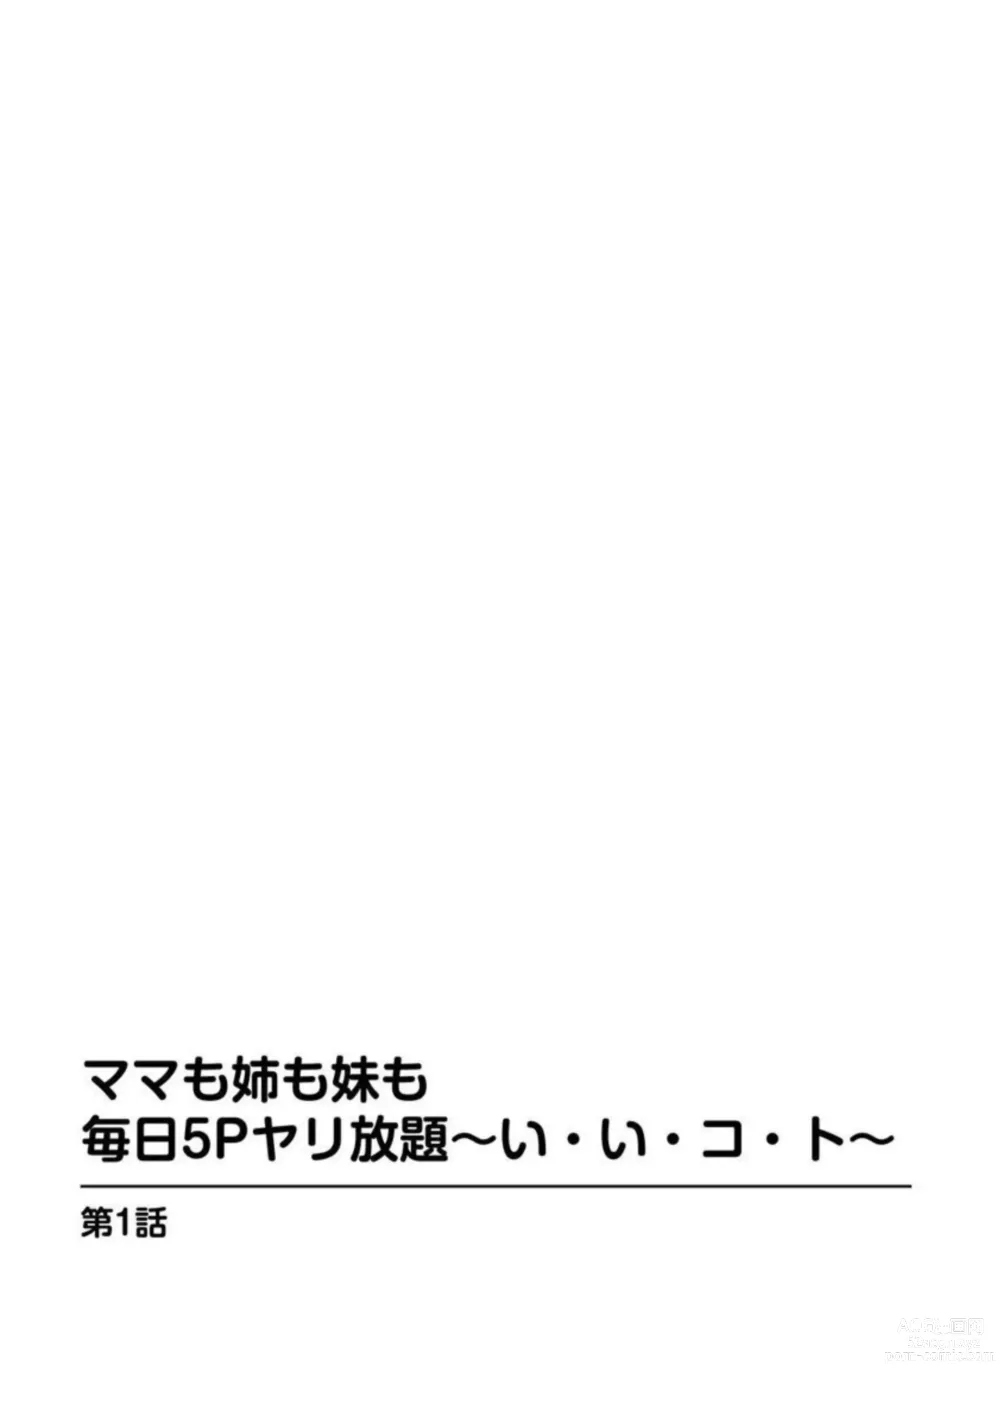 Page 3 of manga Mama mo Ane mo Imouto mo Mainichi 5 P Yarihoudai ~I i ko to~ [Bunsatsuban] 1-2